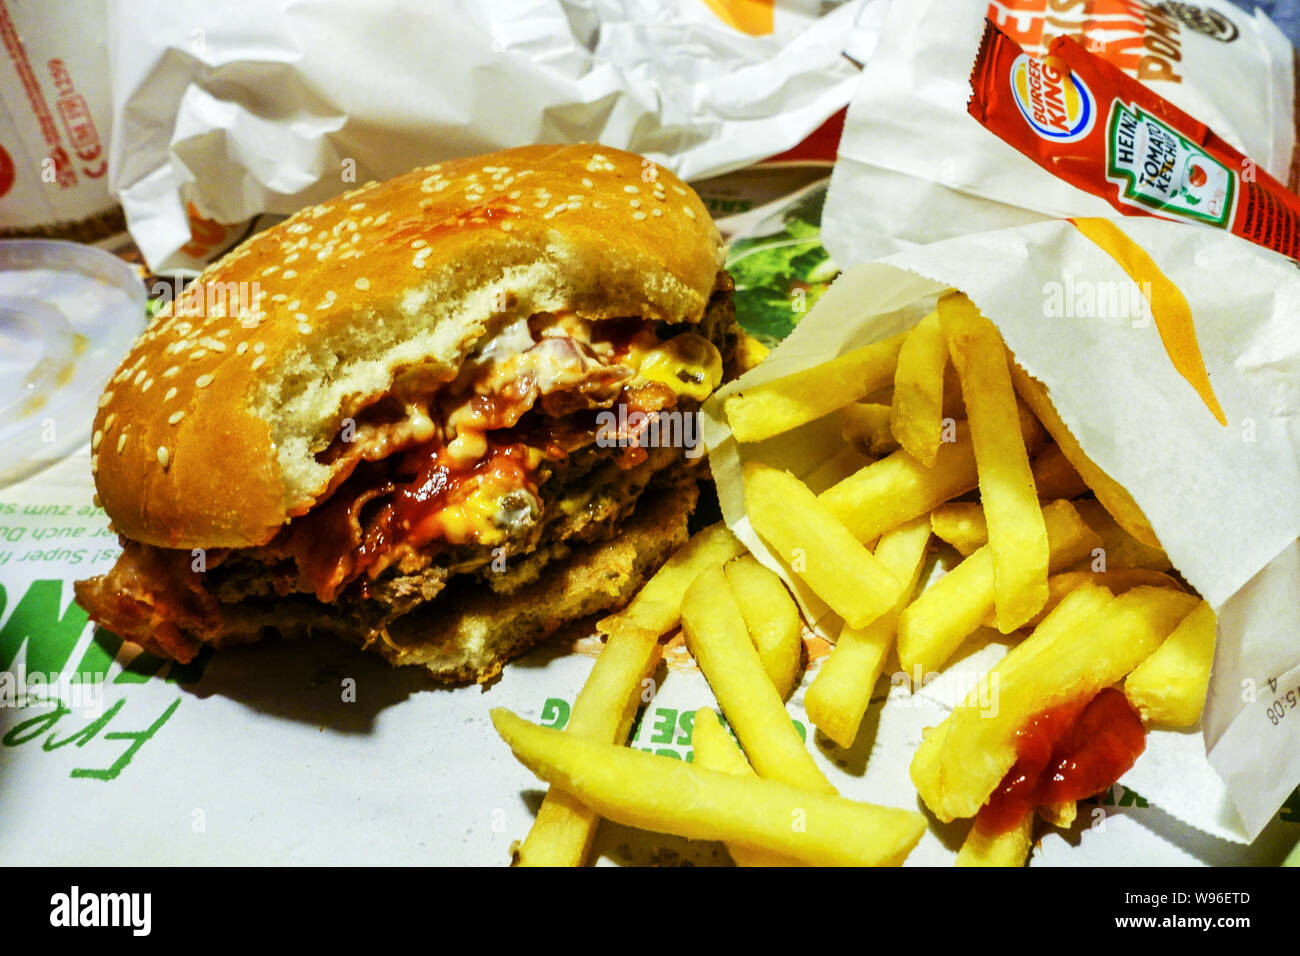 Big king burger hi-res stock photography and images - Alamy